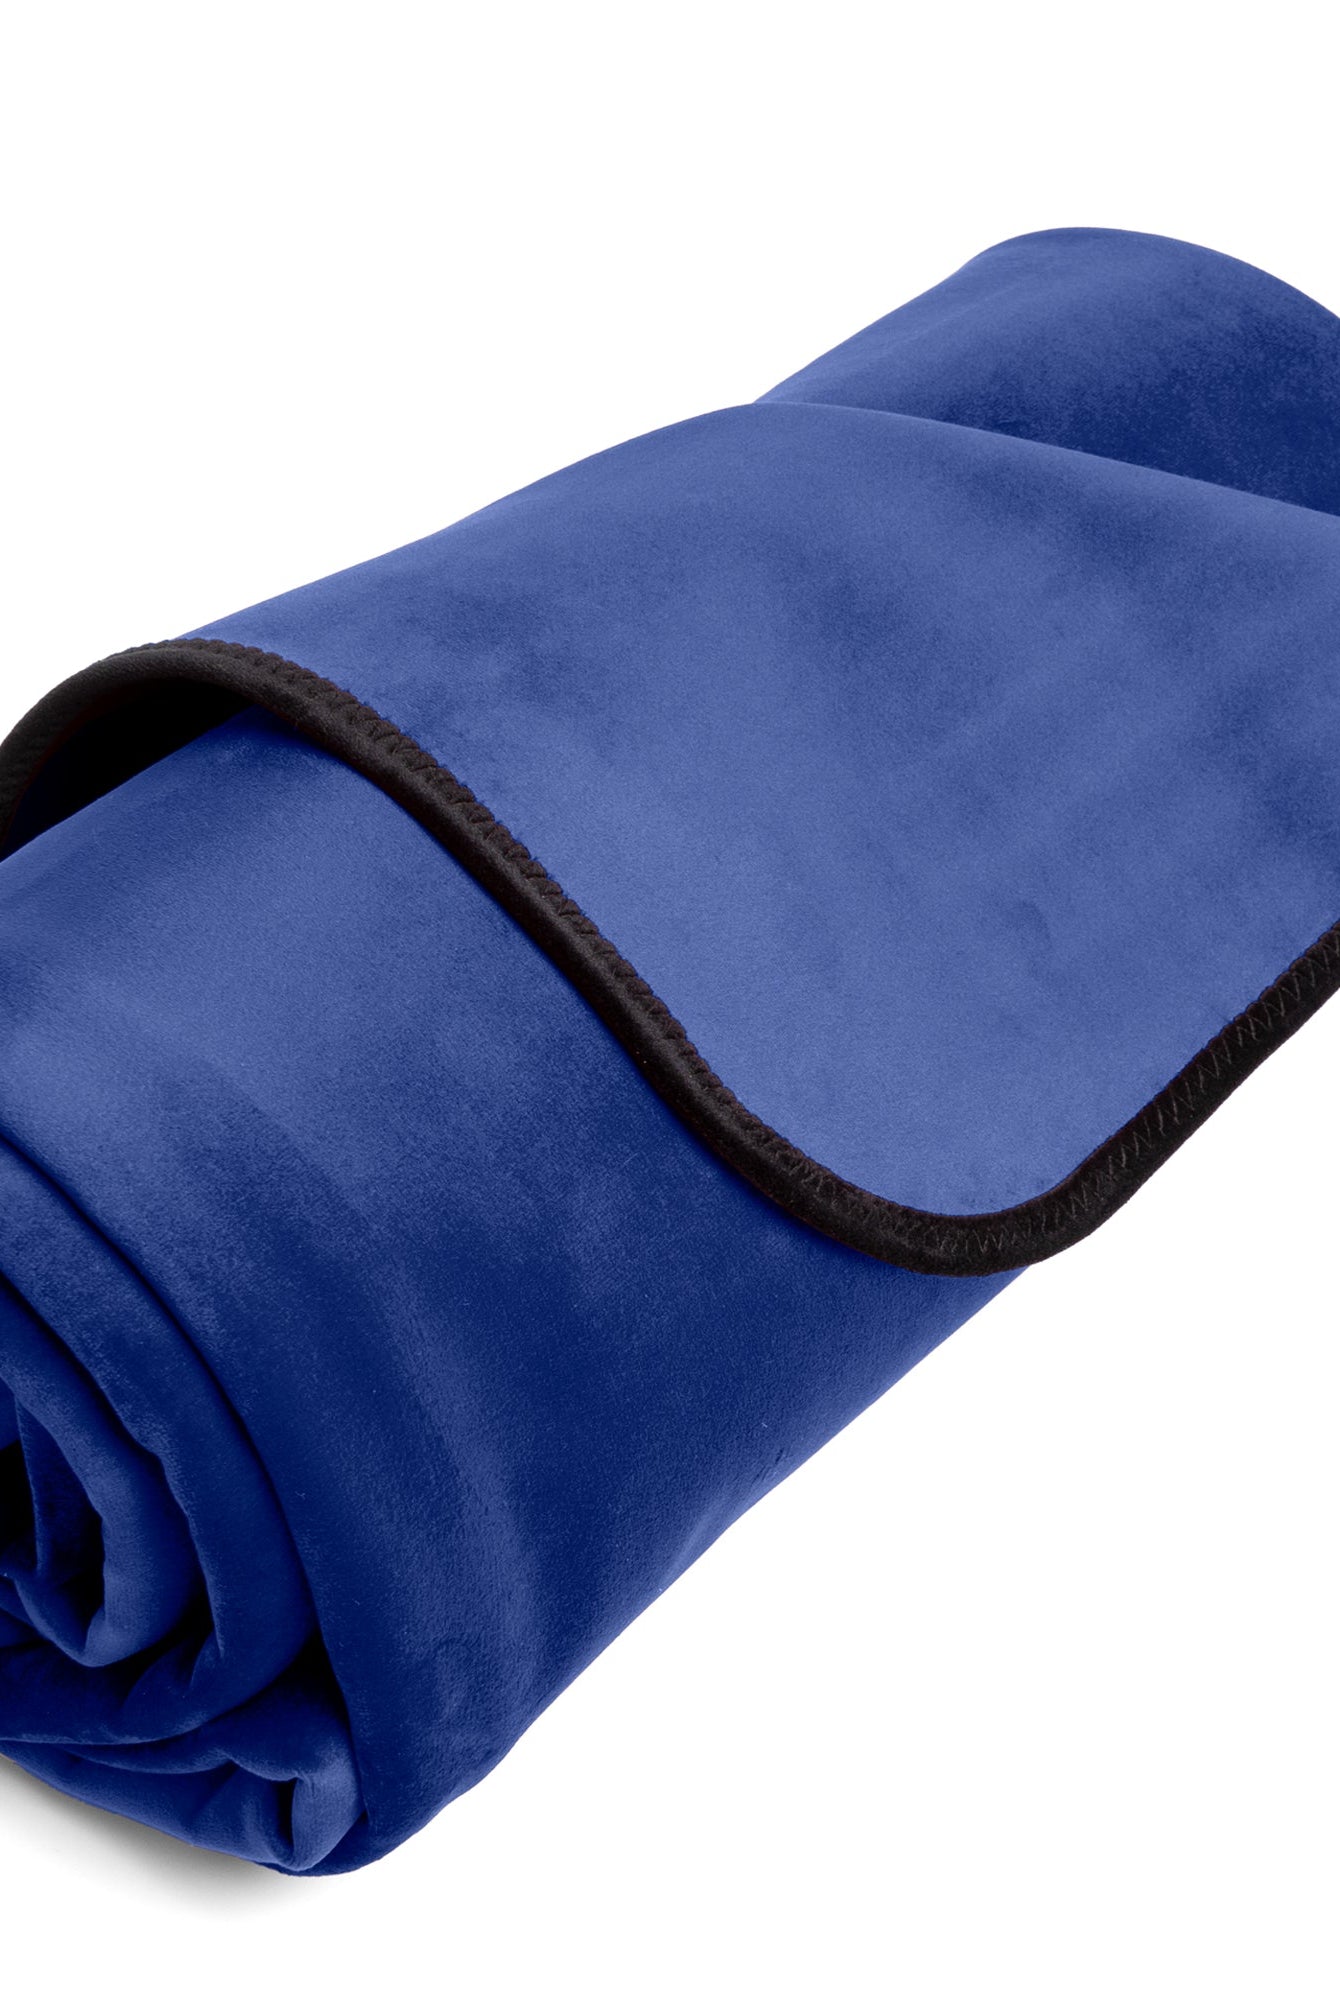 Fascinator Throw Royal Blue Microvelvet - Regular Size - ACME Pleasure